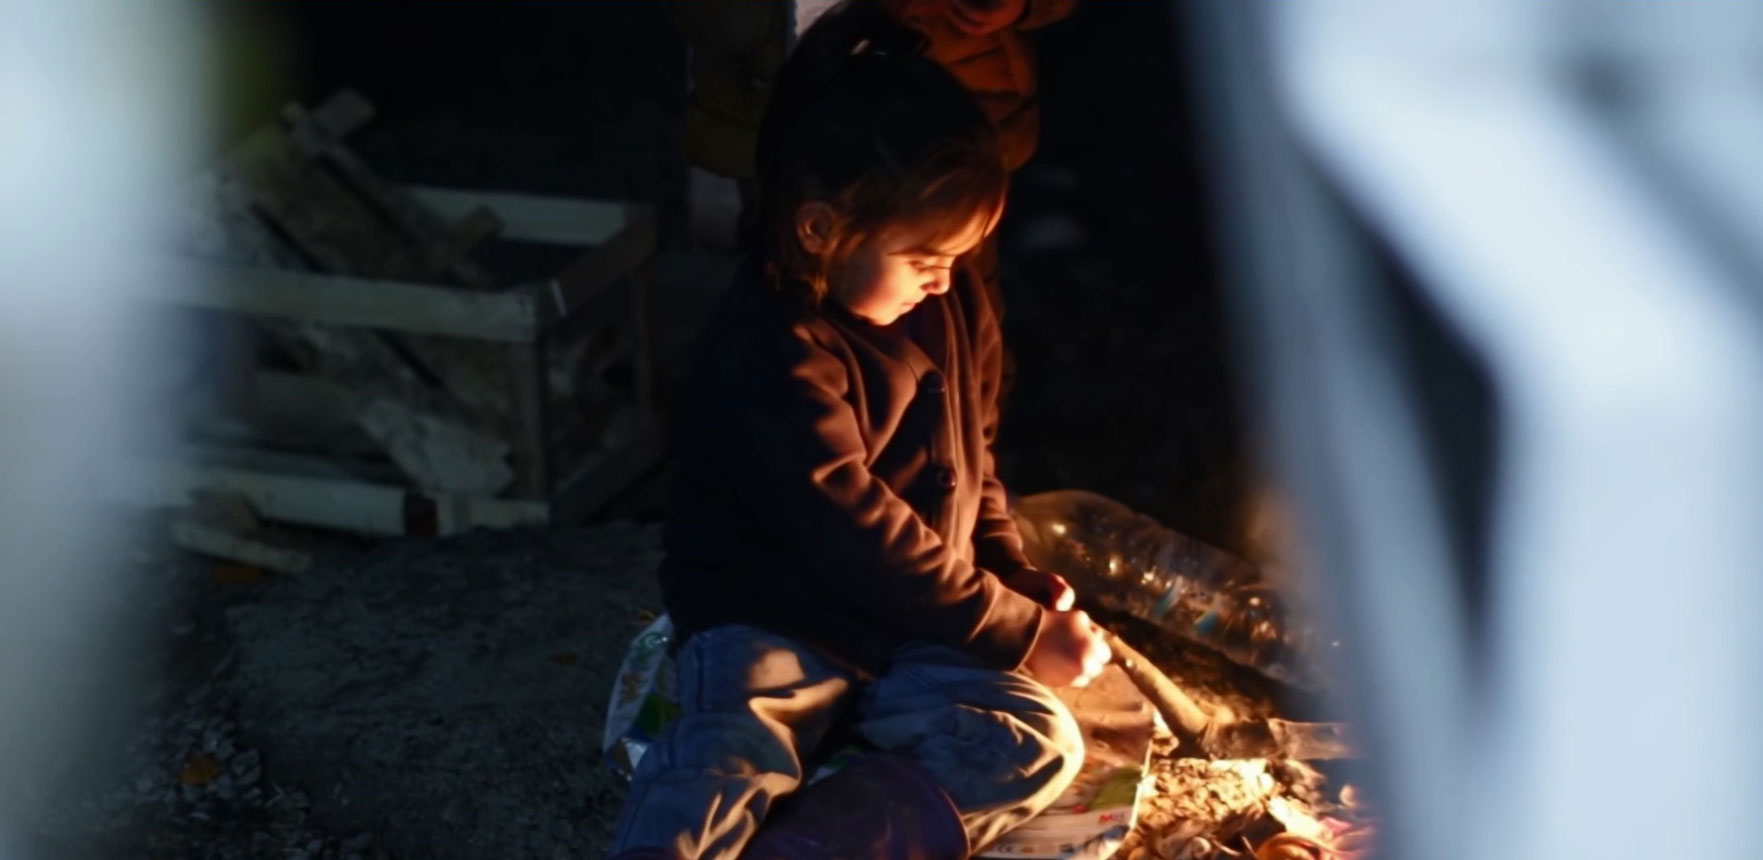 PHOTO: In Lesbos' Moria refugee camp, children gather around fires to keep warm.